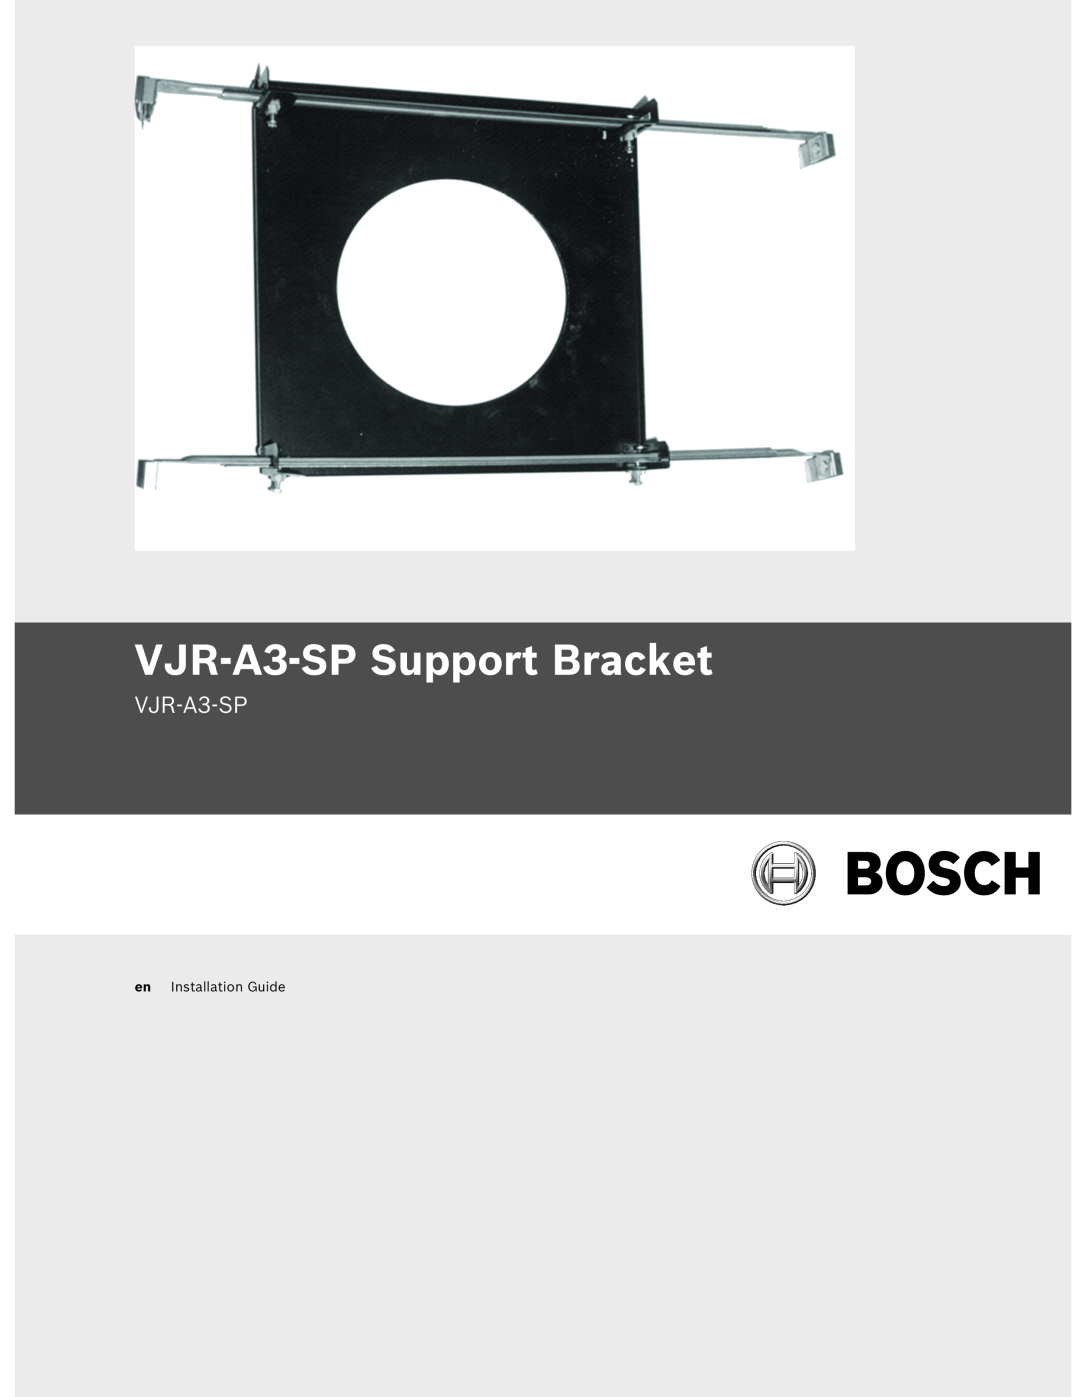 Bosch Appliances manual VJR-A3-SP Support Bracket, en Installation Guide 